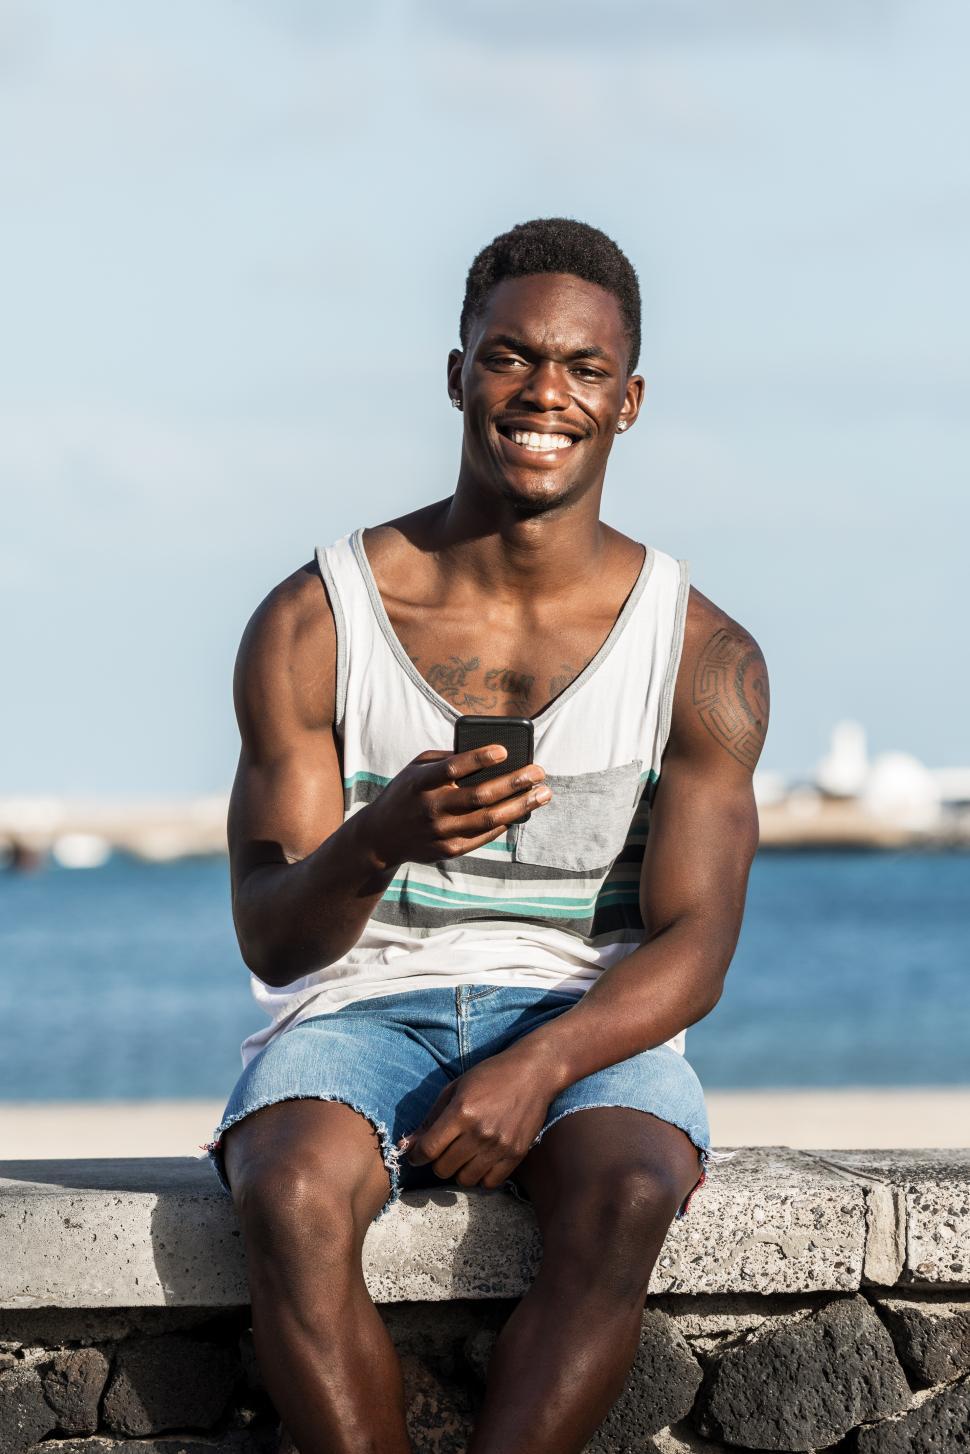 Free Image of Smiling man using smartphone on embankment 